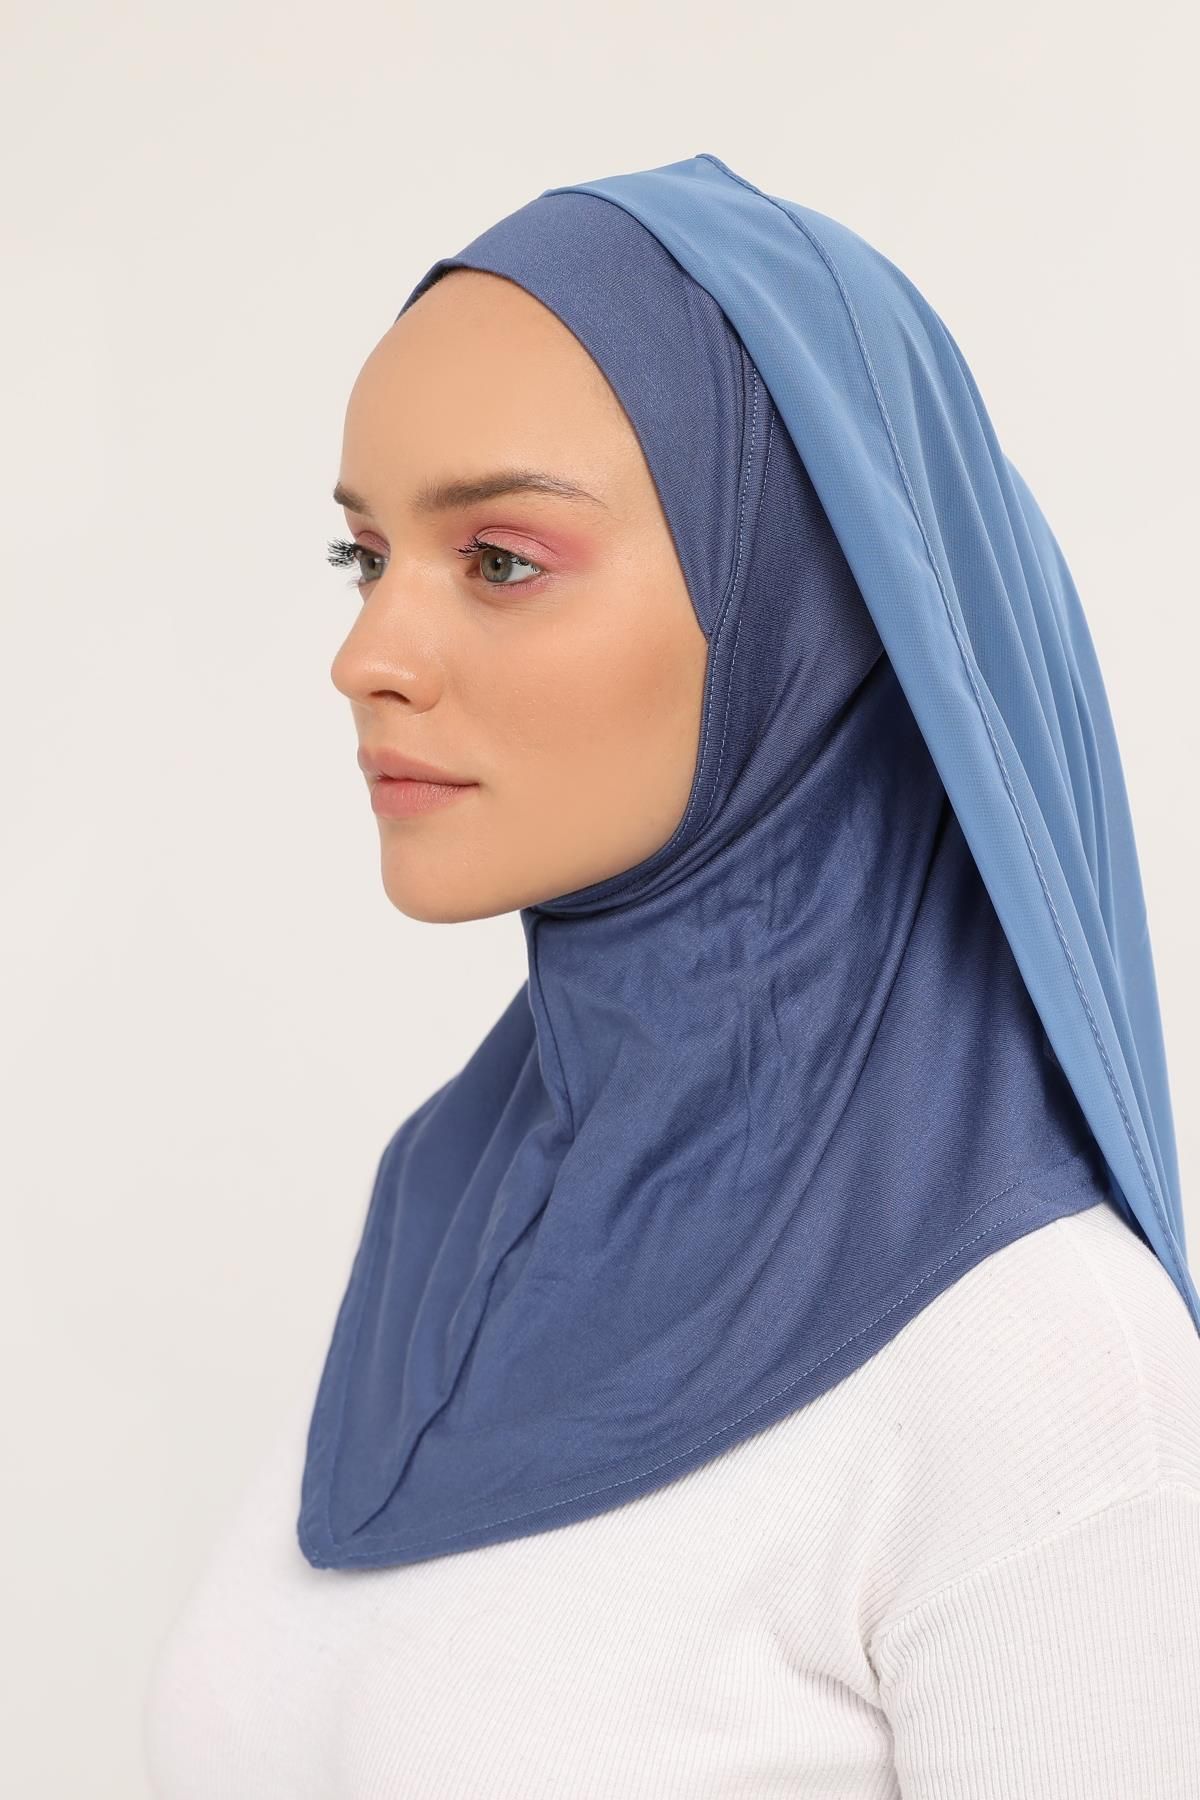 Altobeh Hazır Lüks Pratik Hijablı Şifon Şal Kot